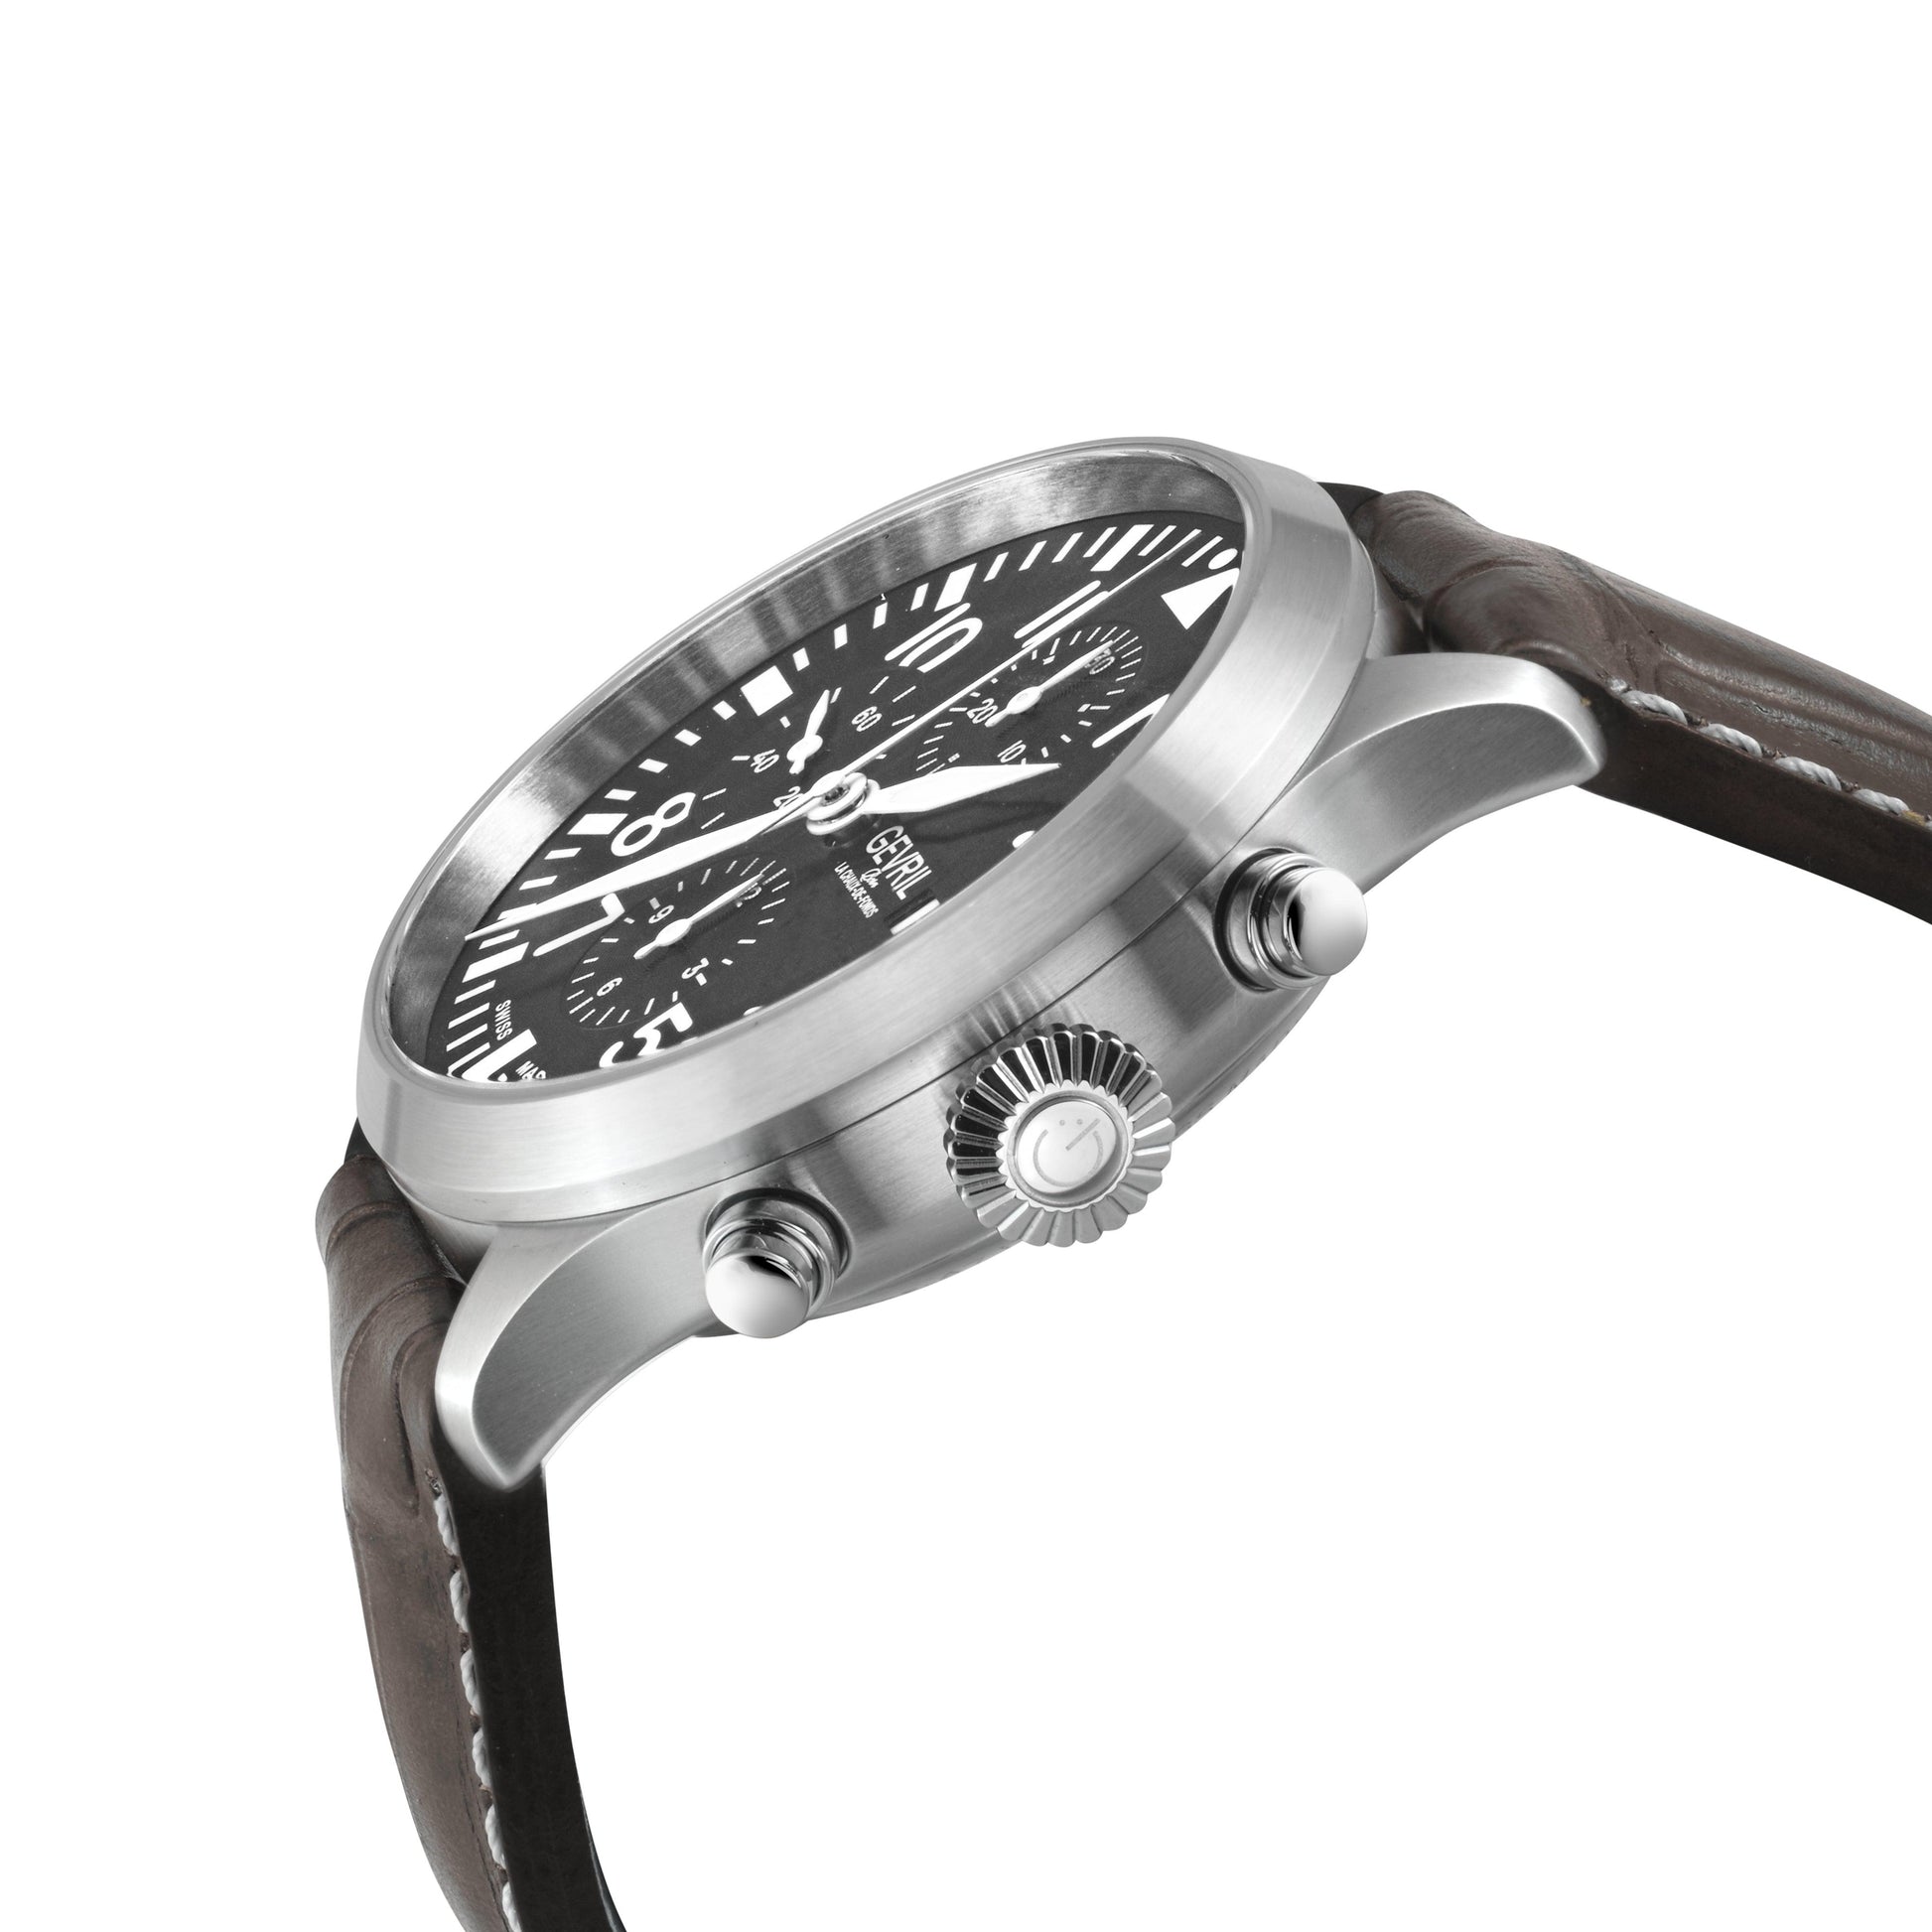 Gevril-Luxury-Swiss-Watches-Gevril Vaughn Chronograph - Pilot-47102-1